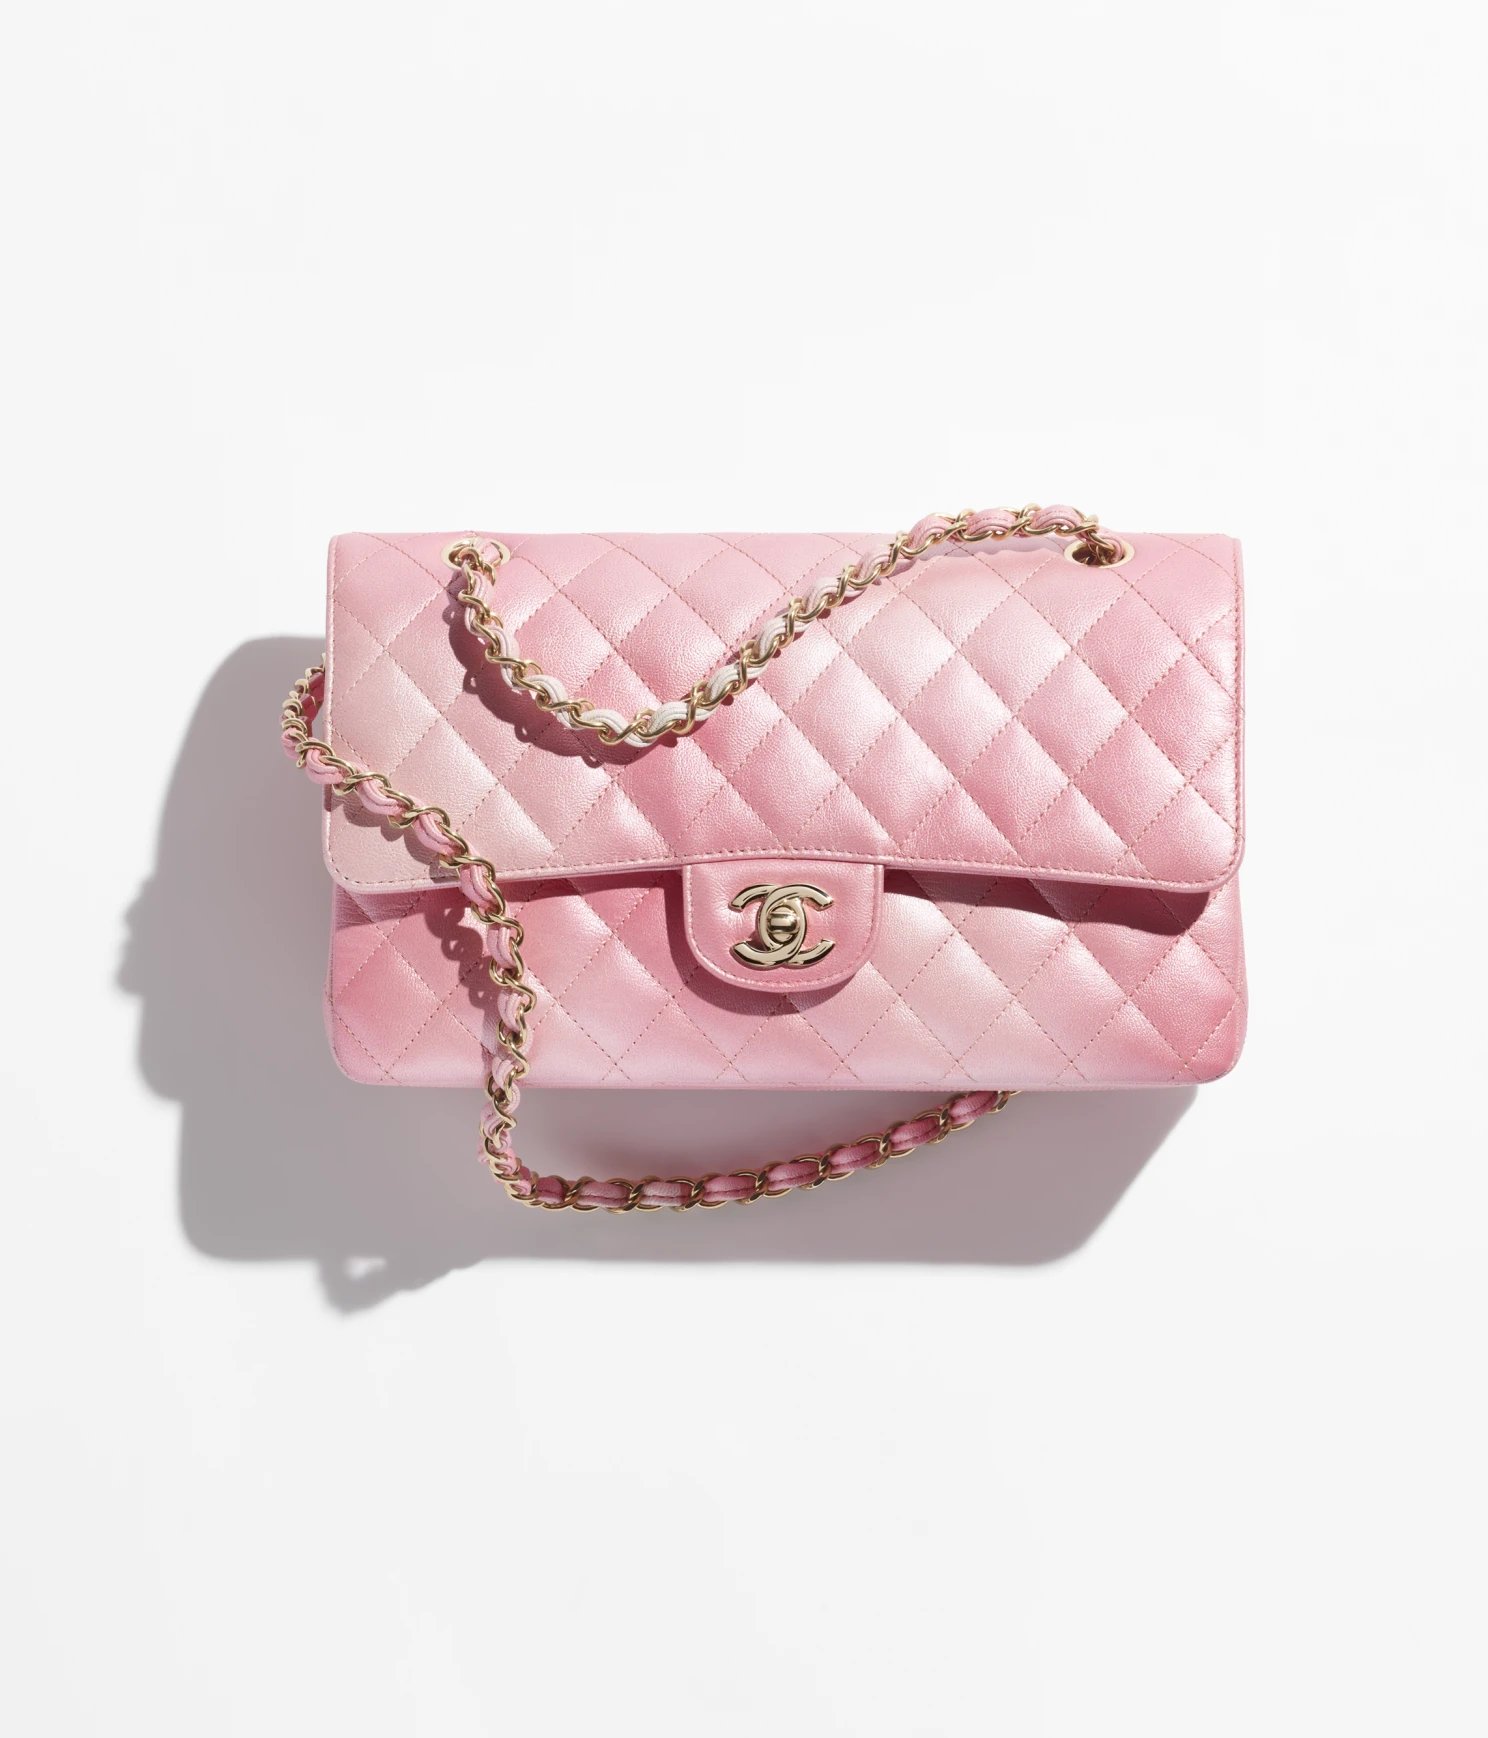 on X: Pink Classic Chanel Handbag !!! <3 $10,200+    / X